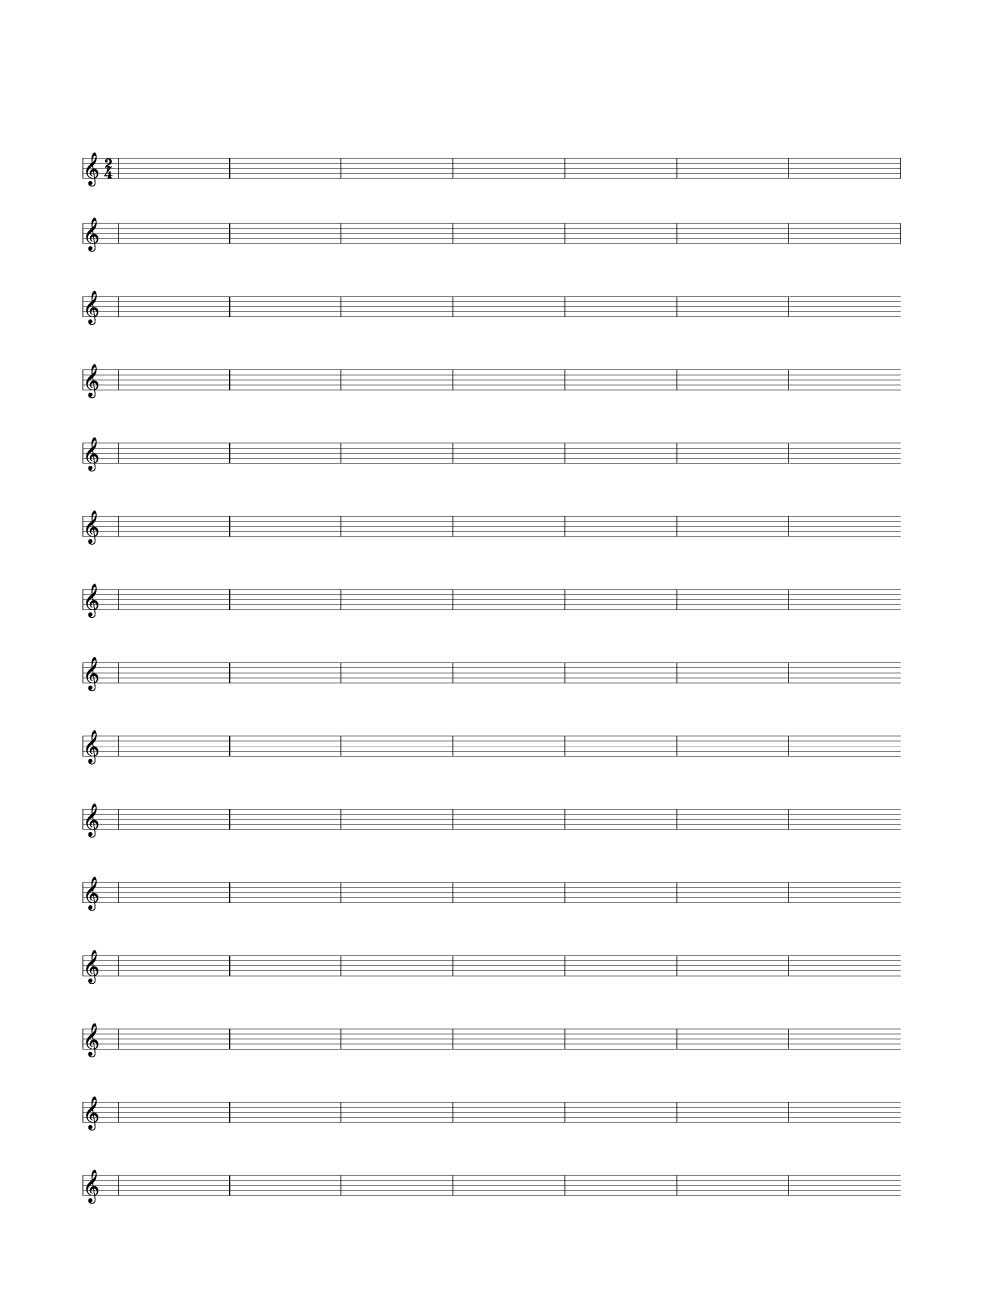 2/4 Time Signature Single Bar Blank Sheet Music | Woo! Jr For Blank Sheet Music Template For Word